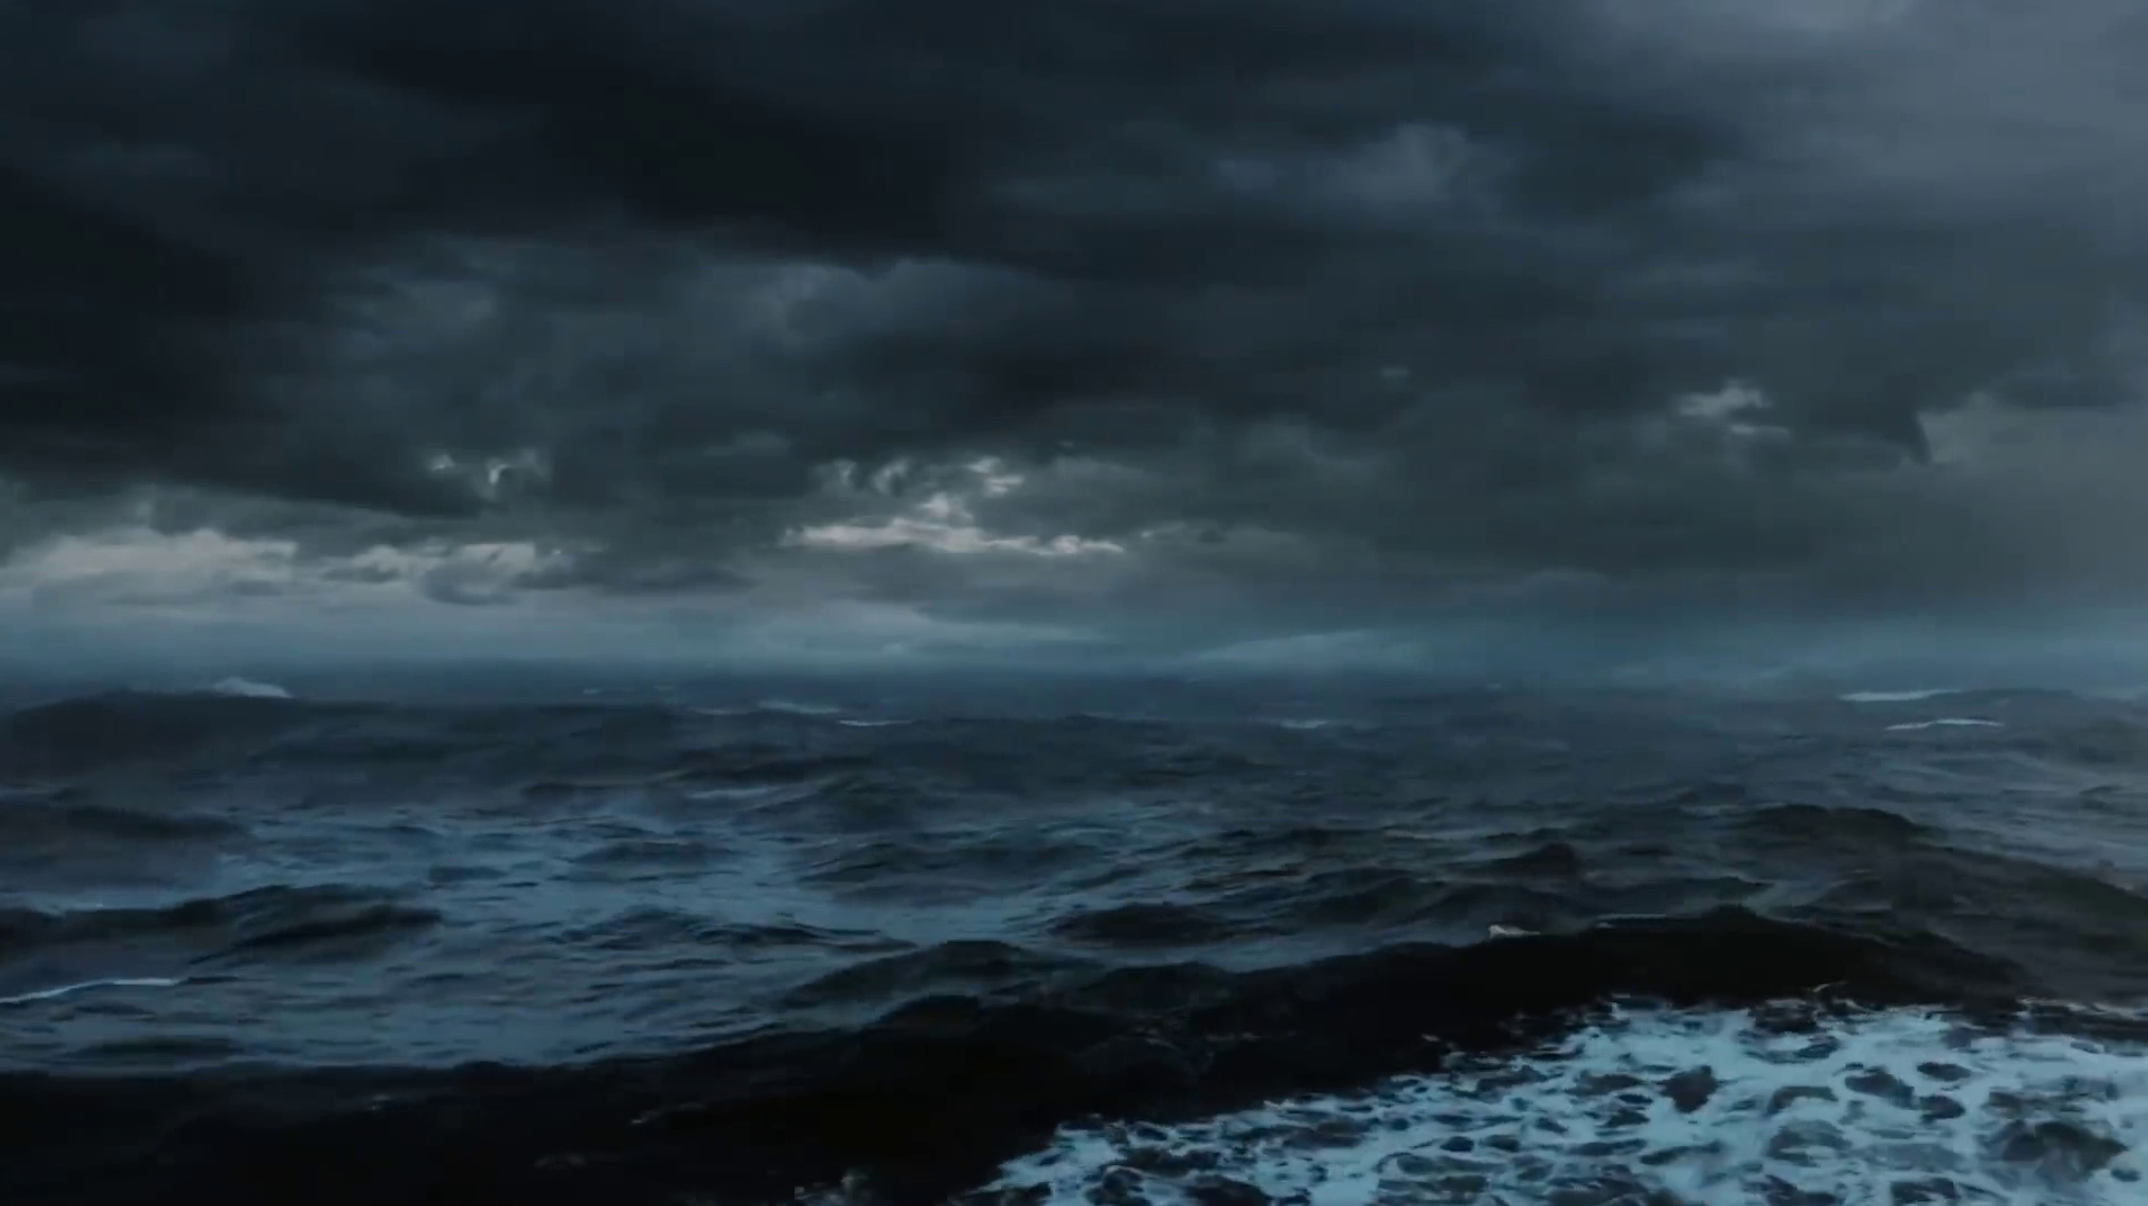 Далекий шторм. Тихий океан шторм. Море шторм. Черное море бушующий шторм. Бушующий океан.